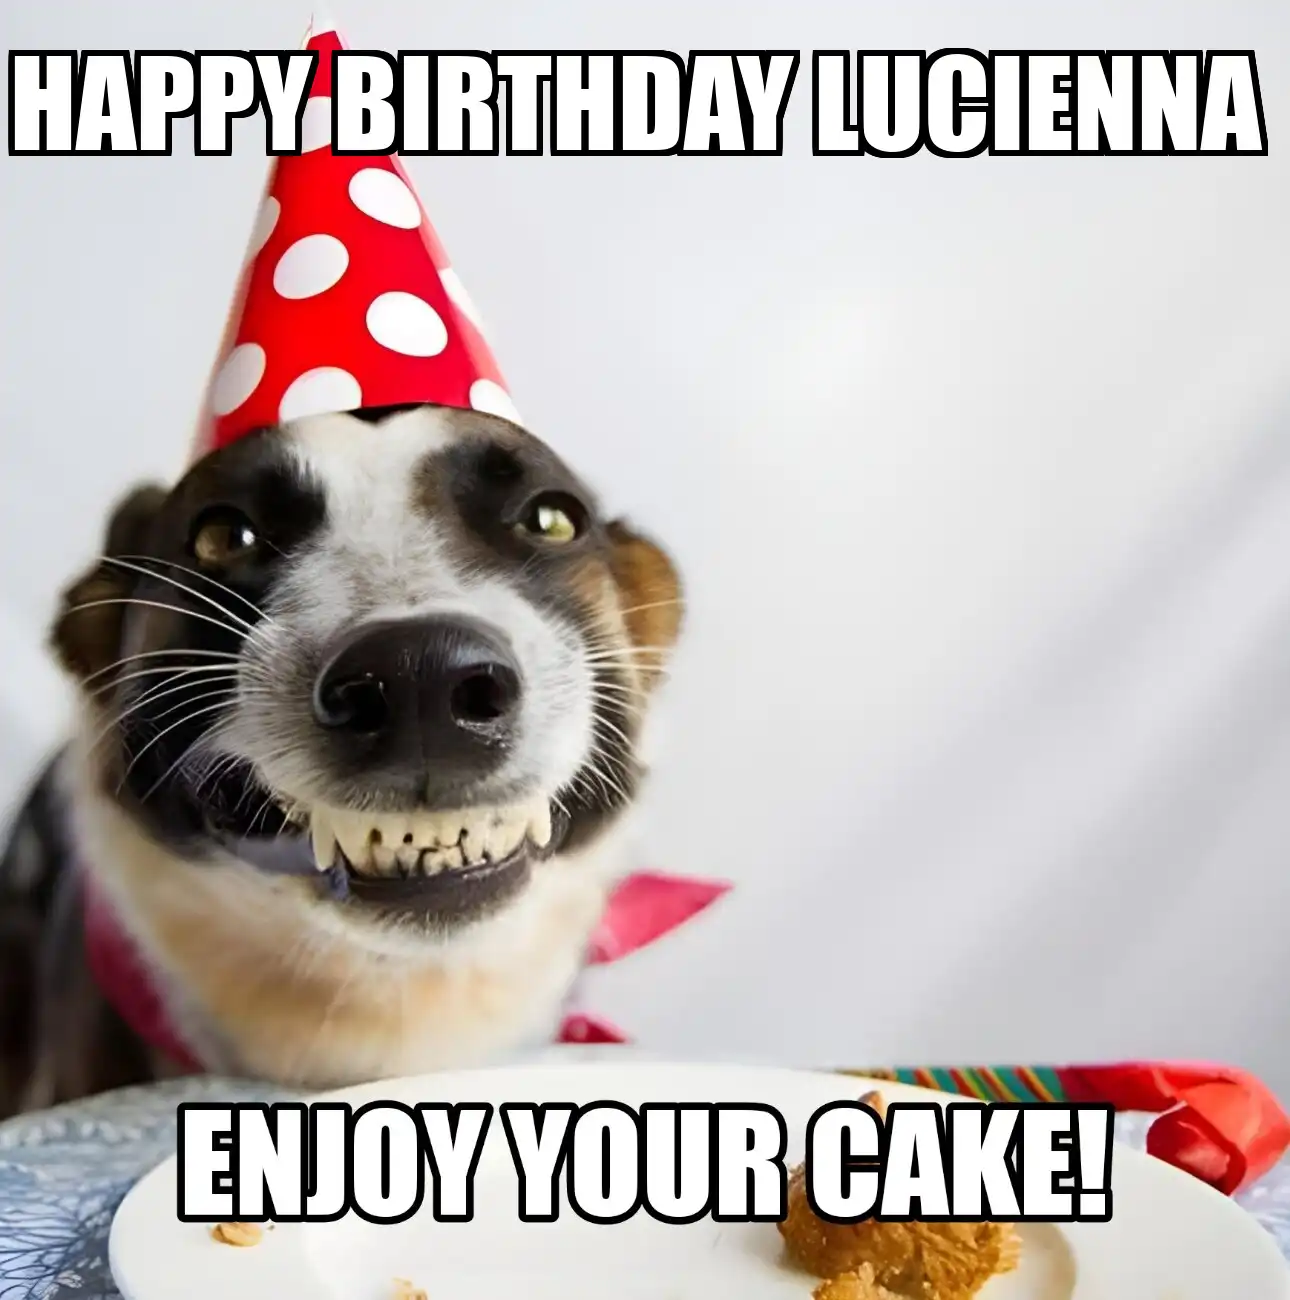 Happy Birthday Lucienna Enjoy Your Cake Dog Meme